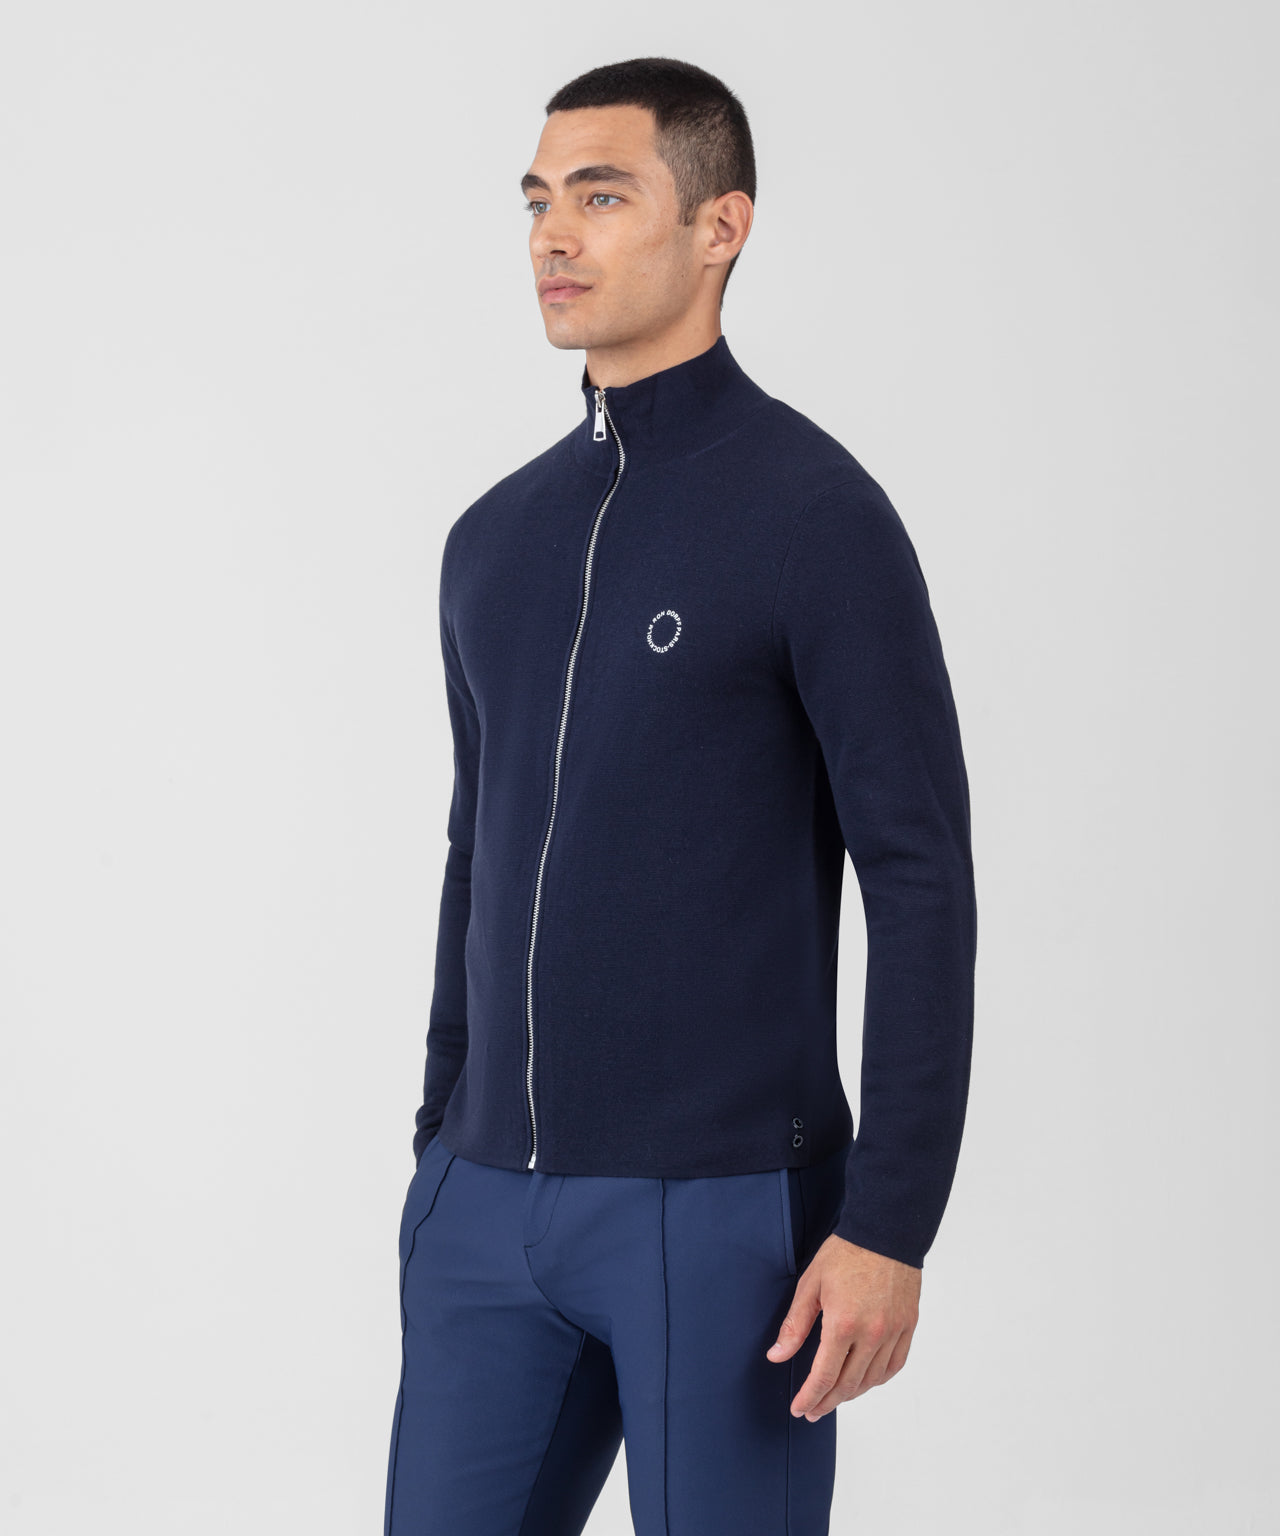 Milano Wool Jacket: Navy